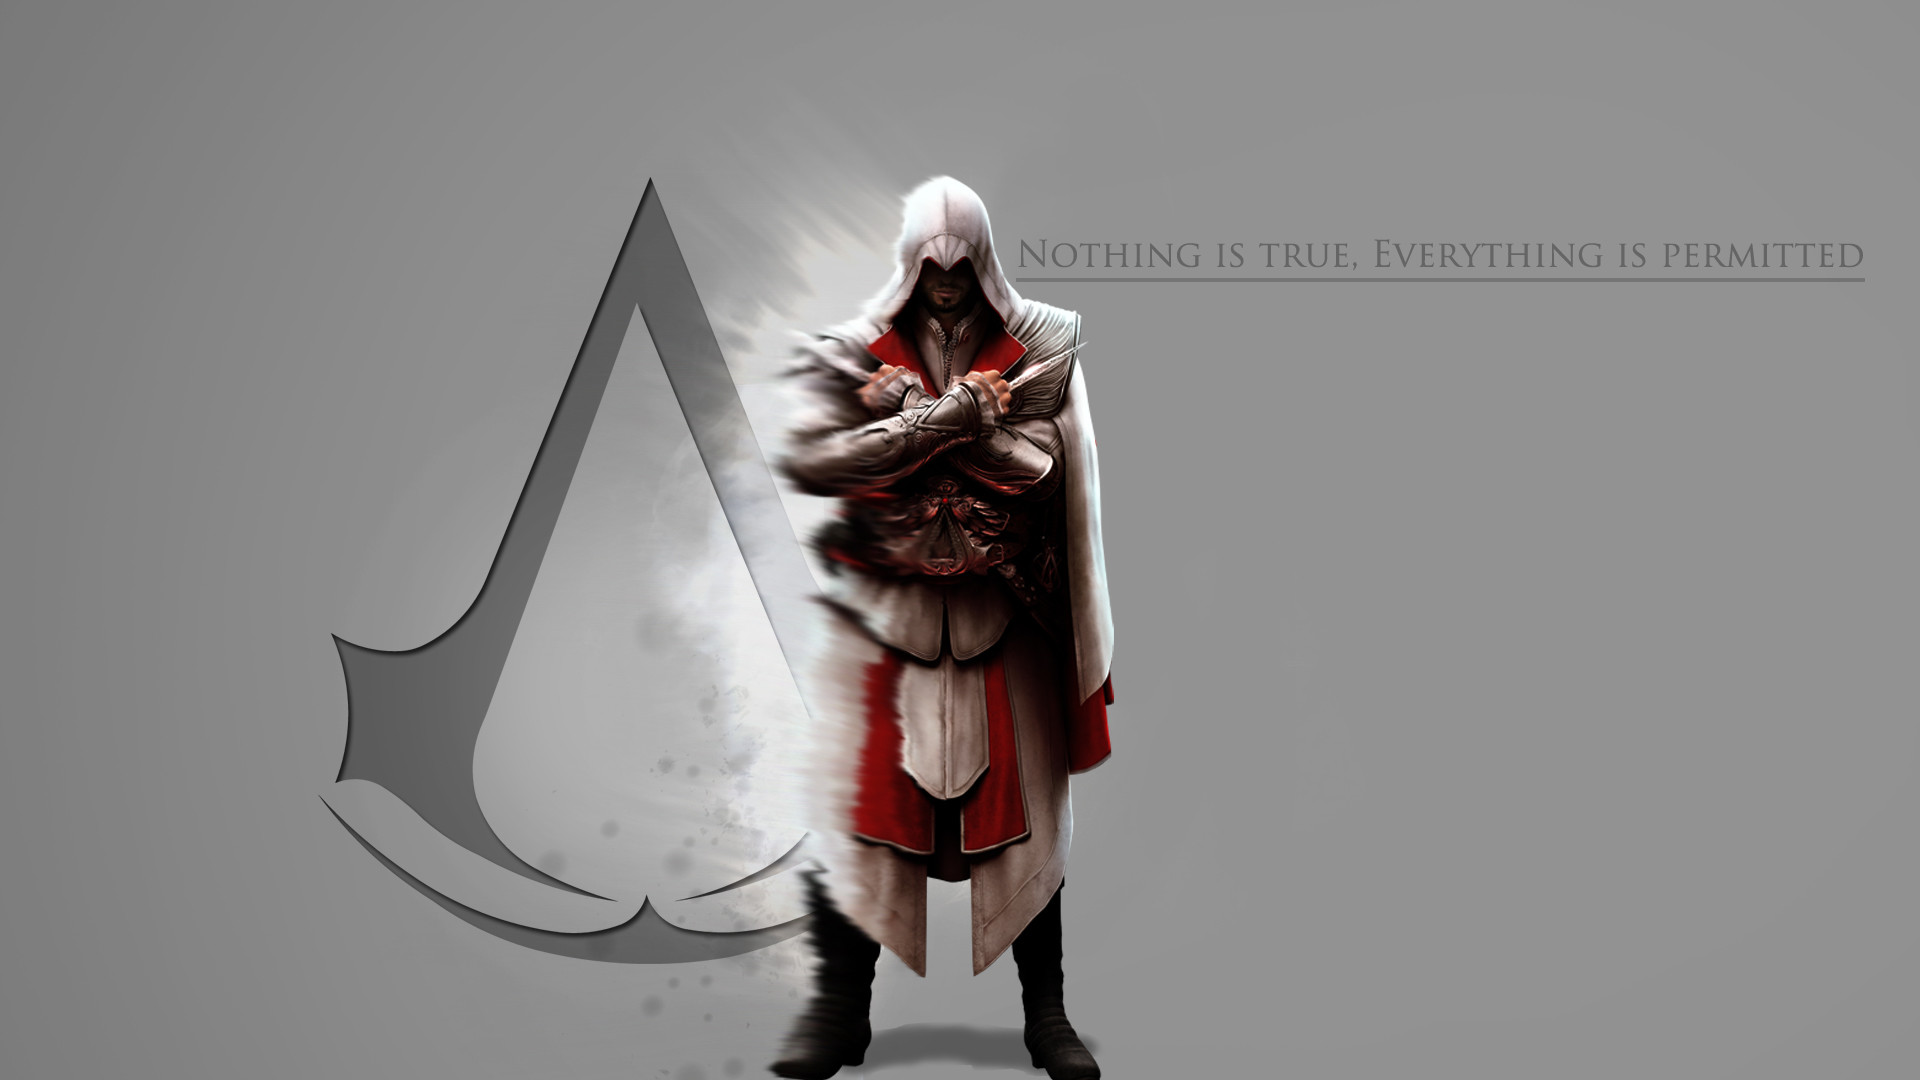 1920x1080 Assassin's Creed II  Wallpaper by jimjim617 Assassin's Creed II   Wallpaper by jimjim617